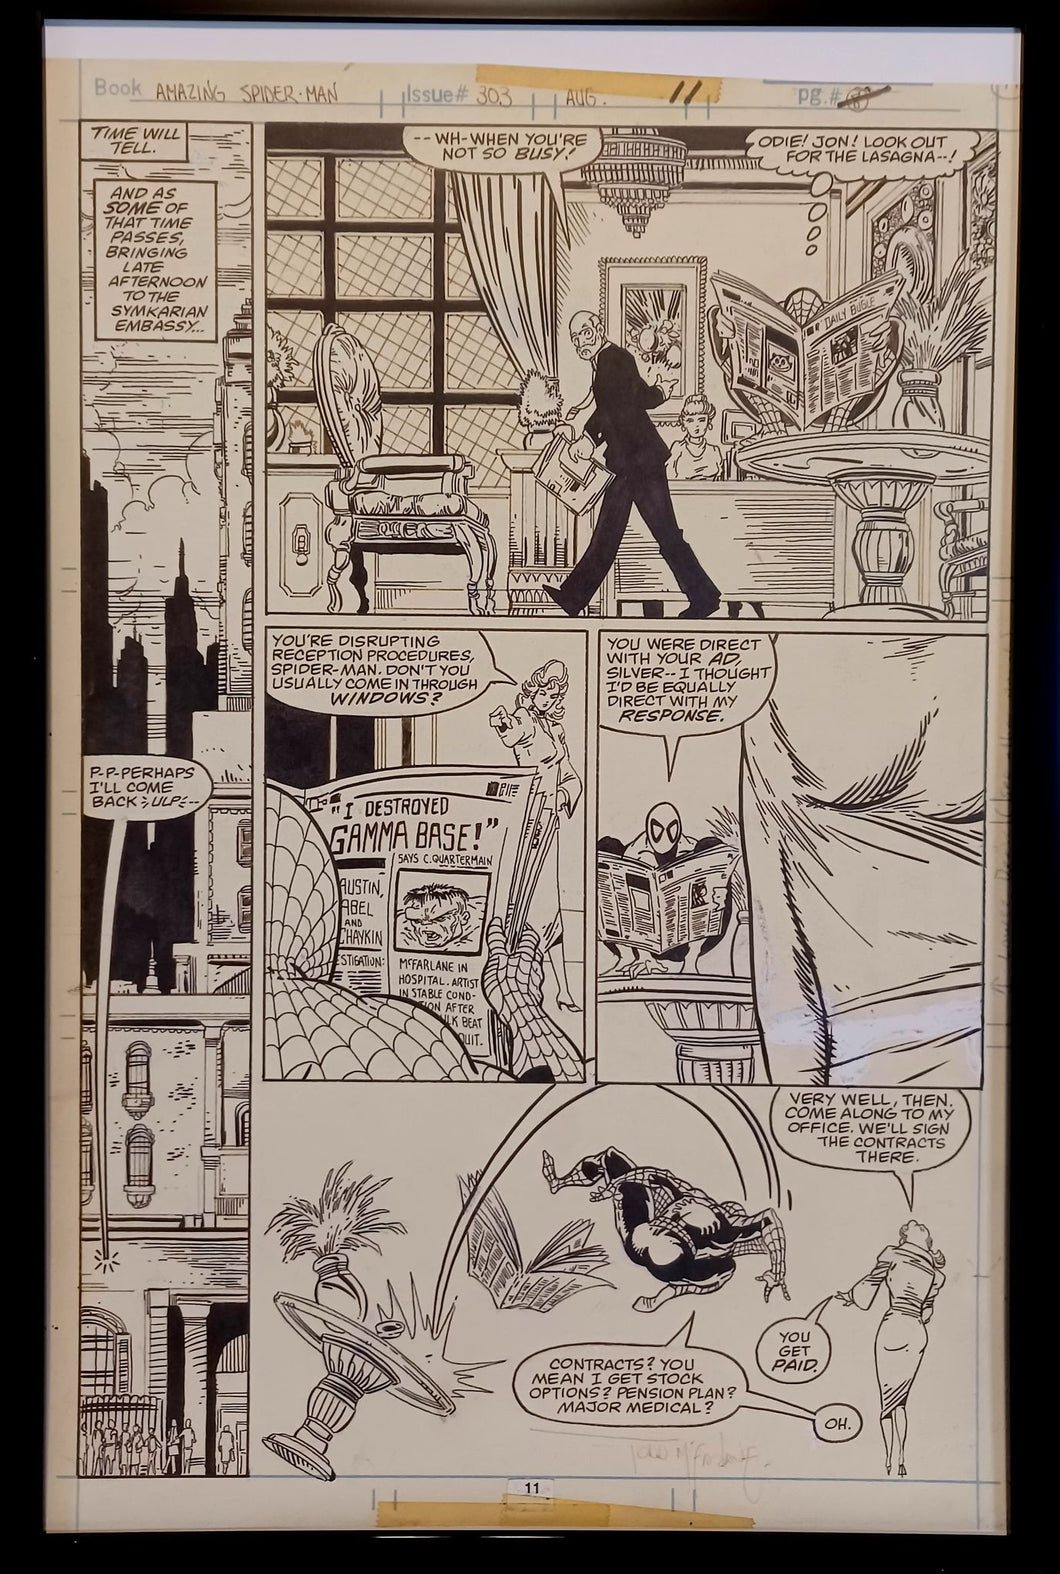 Amazing Spider-Man #303 pg. 9 by Todd McFarlane 11x17 FRAMED Original Art Print Comic Poster